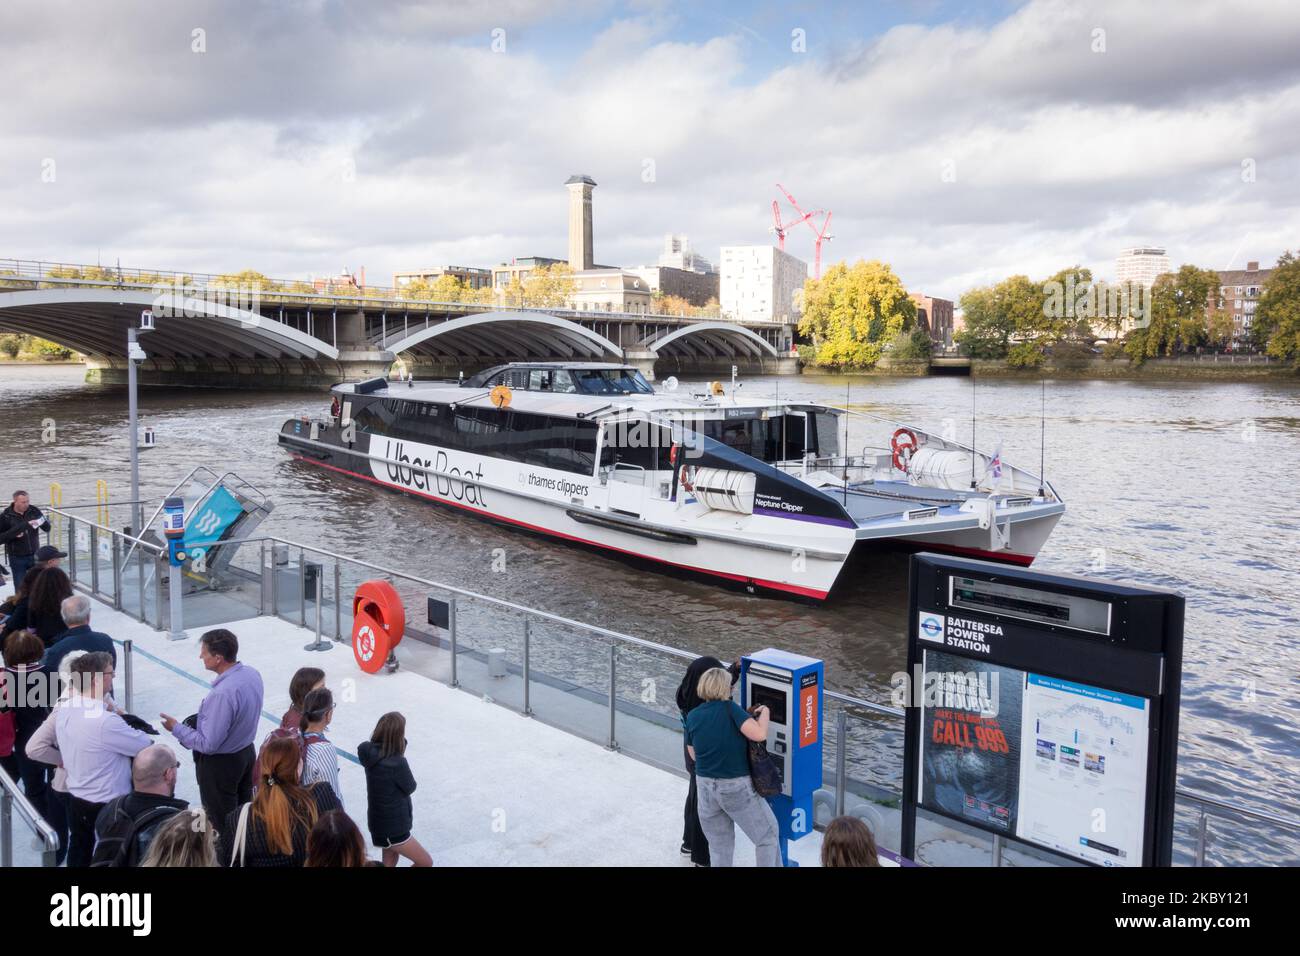 Un taxi fluvial Uber Boat arrivant à quai à la station d'alimentation de Battersea. Banque D'Images